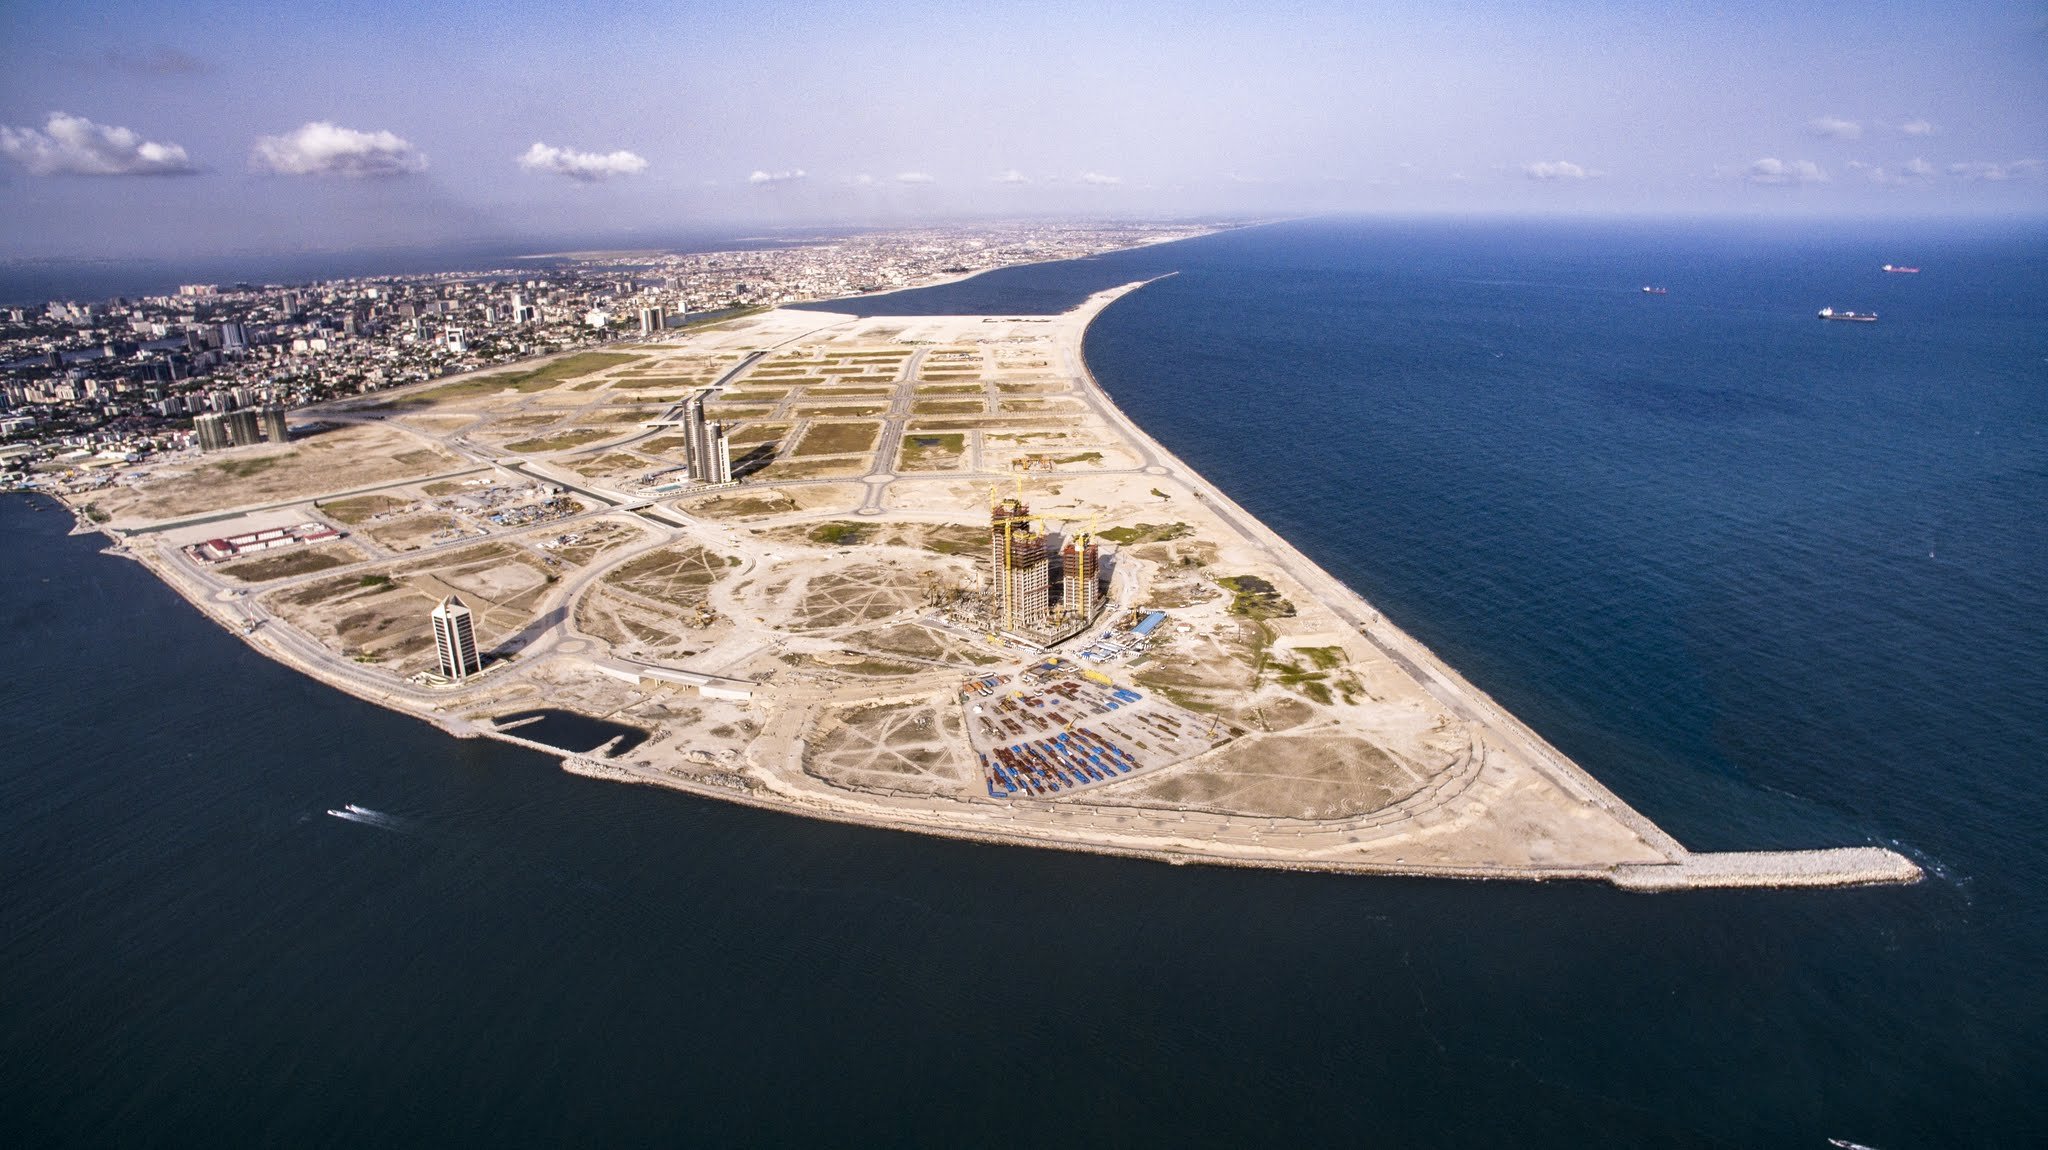 More information about "Eko Atlantic: Η φουτουριστική πόλη μέσα στον ωκεανό που σχεδιάζεται στη Νιγηρία"